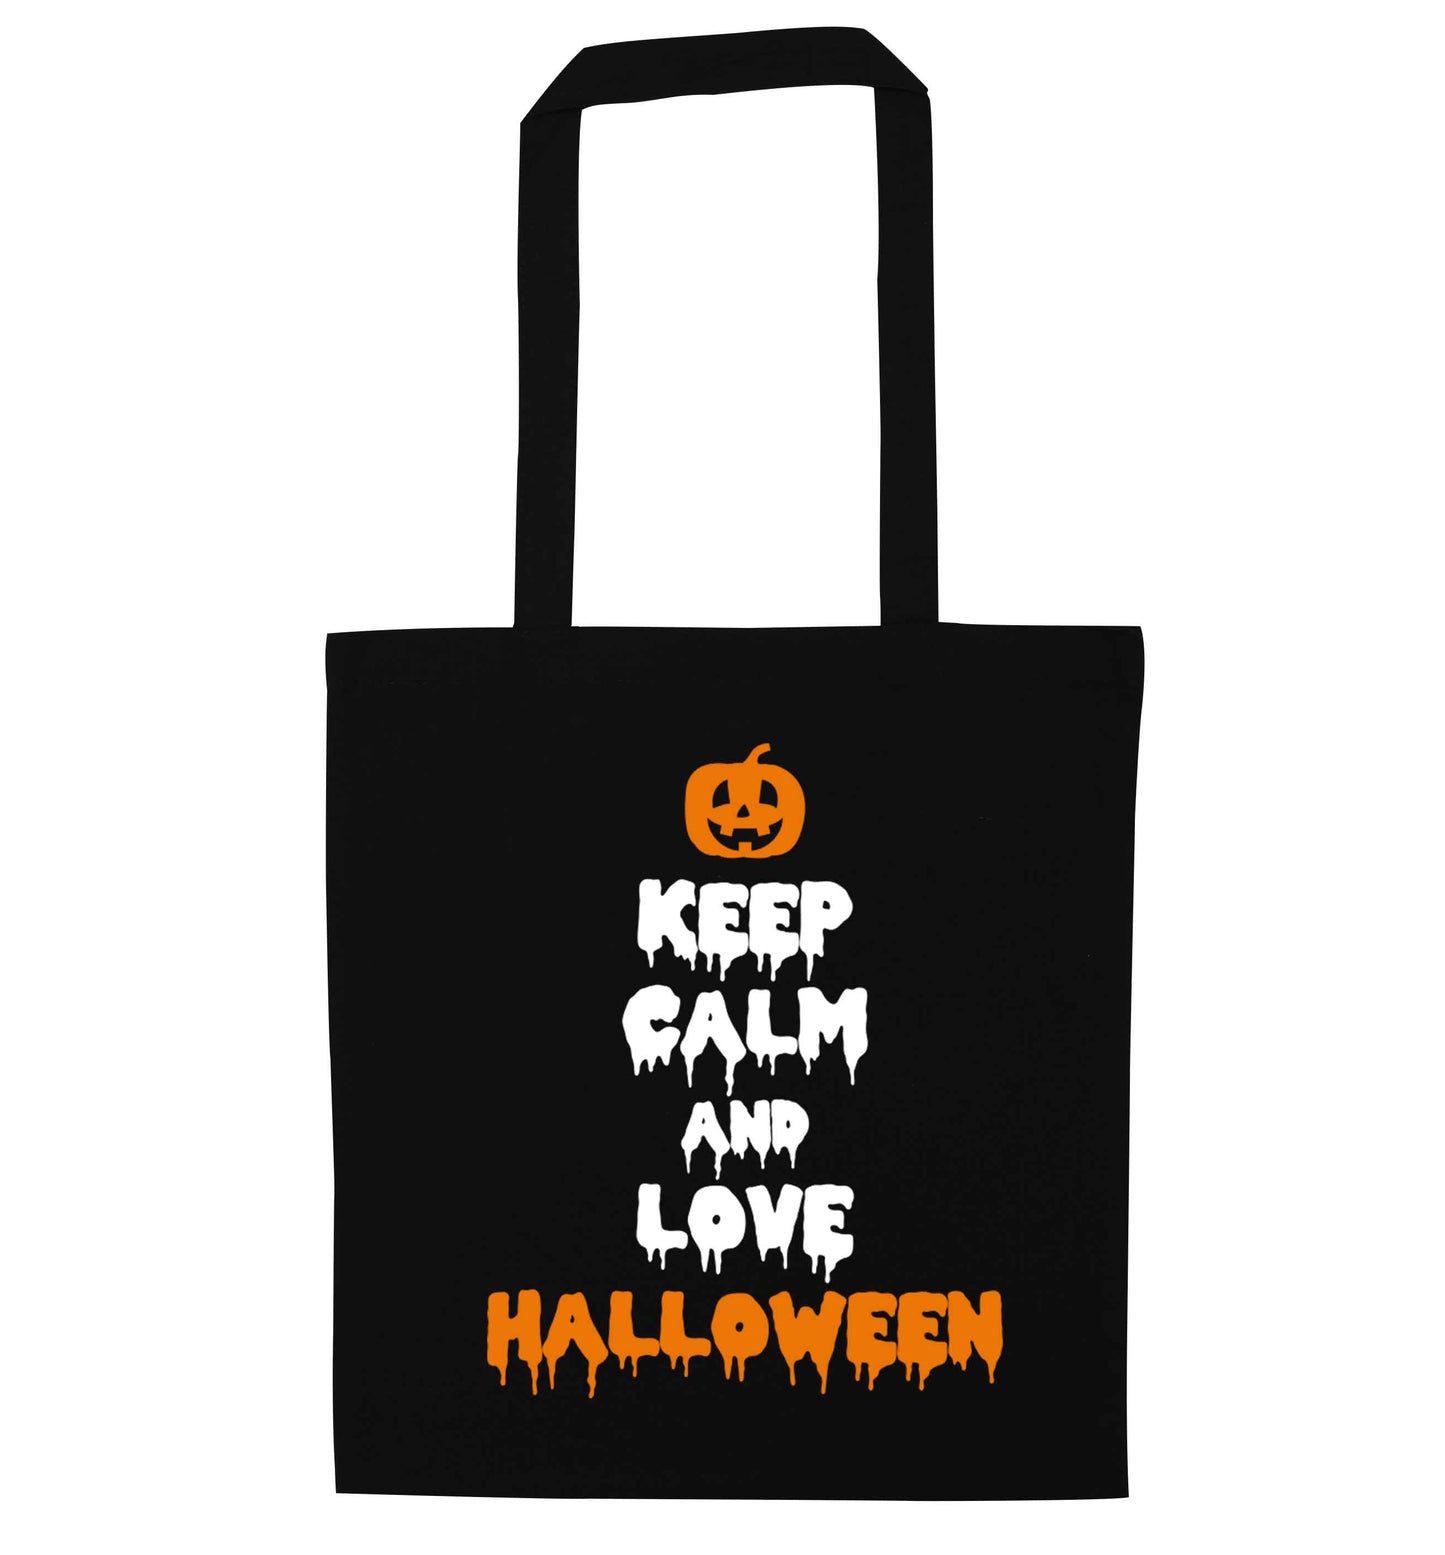 Keep calm and love halloween black tote bag